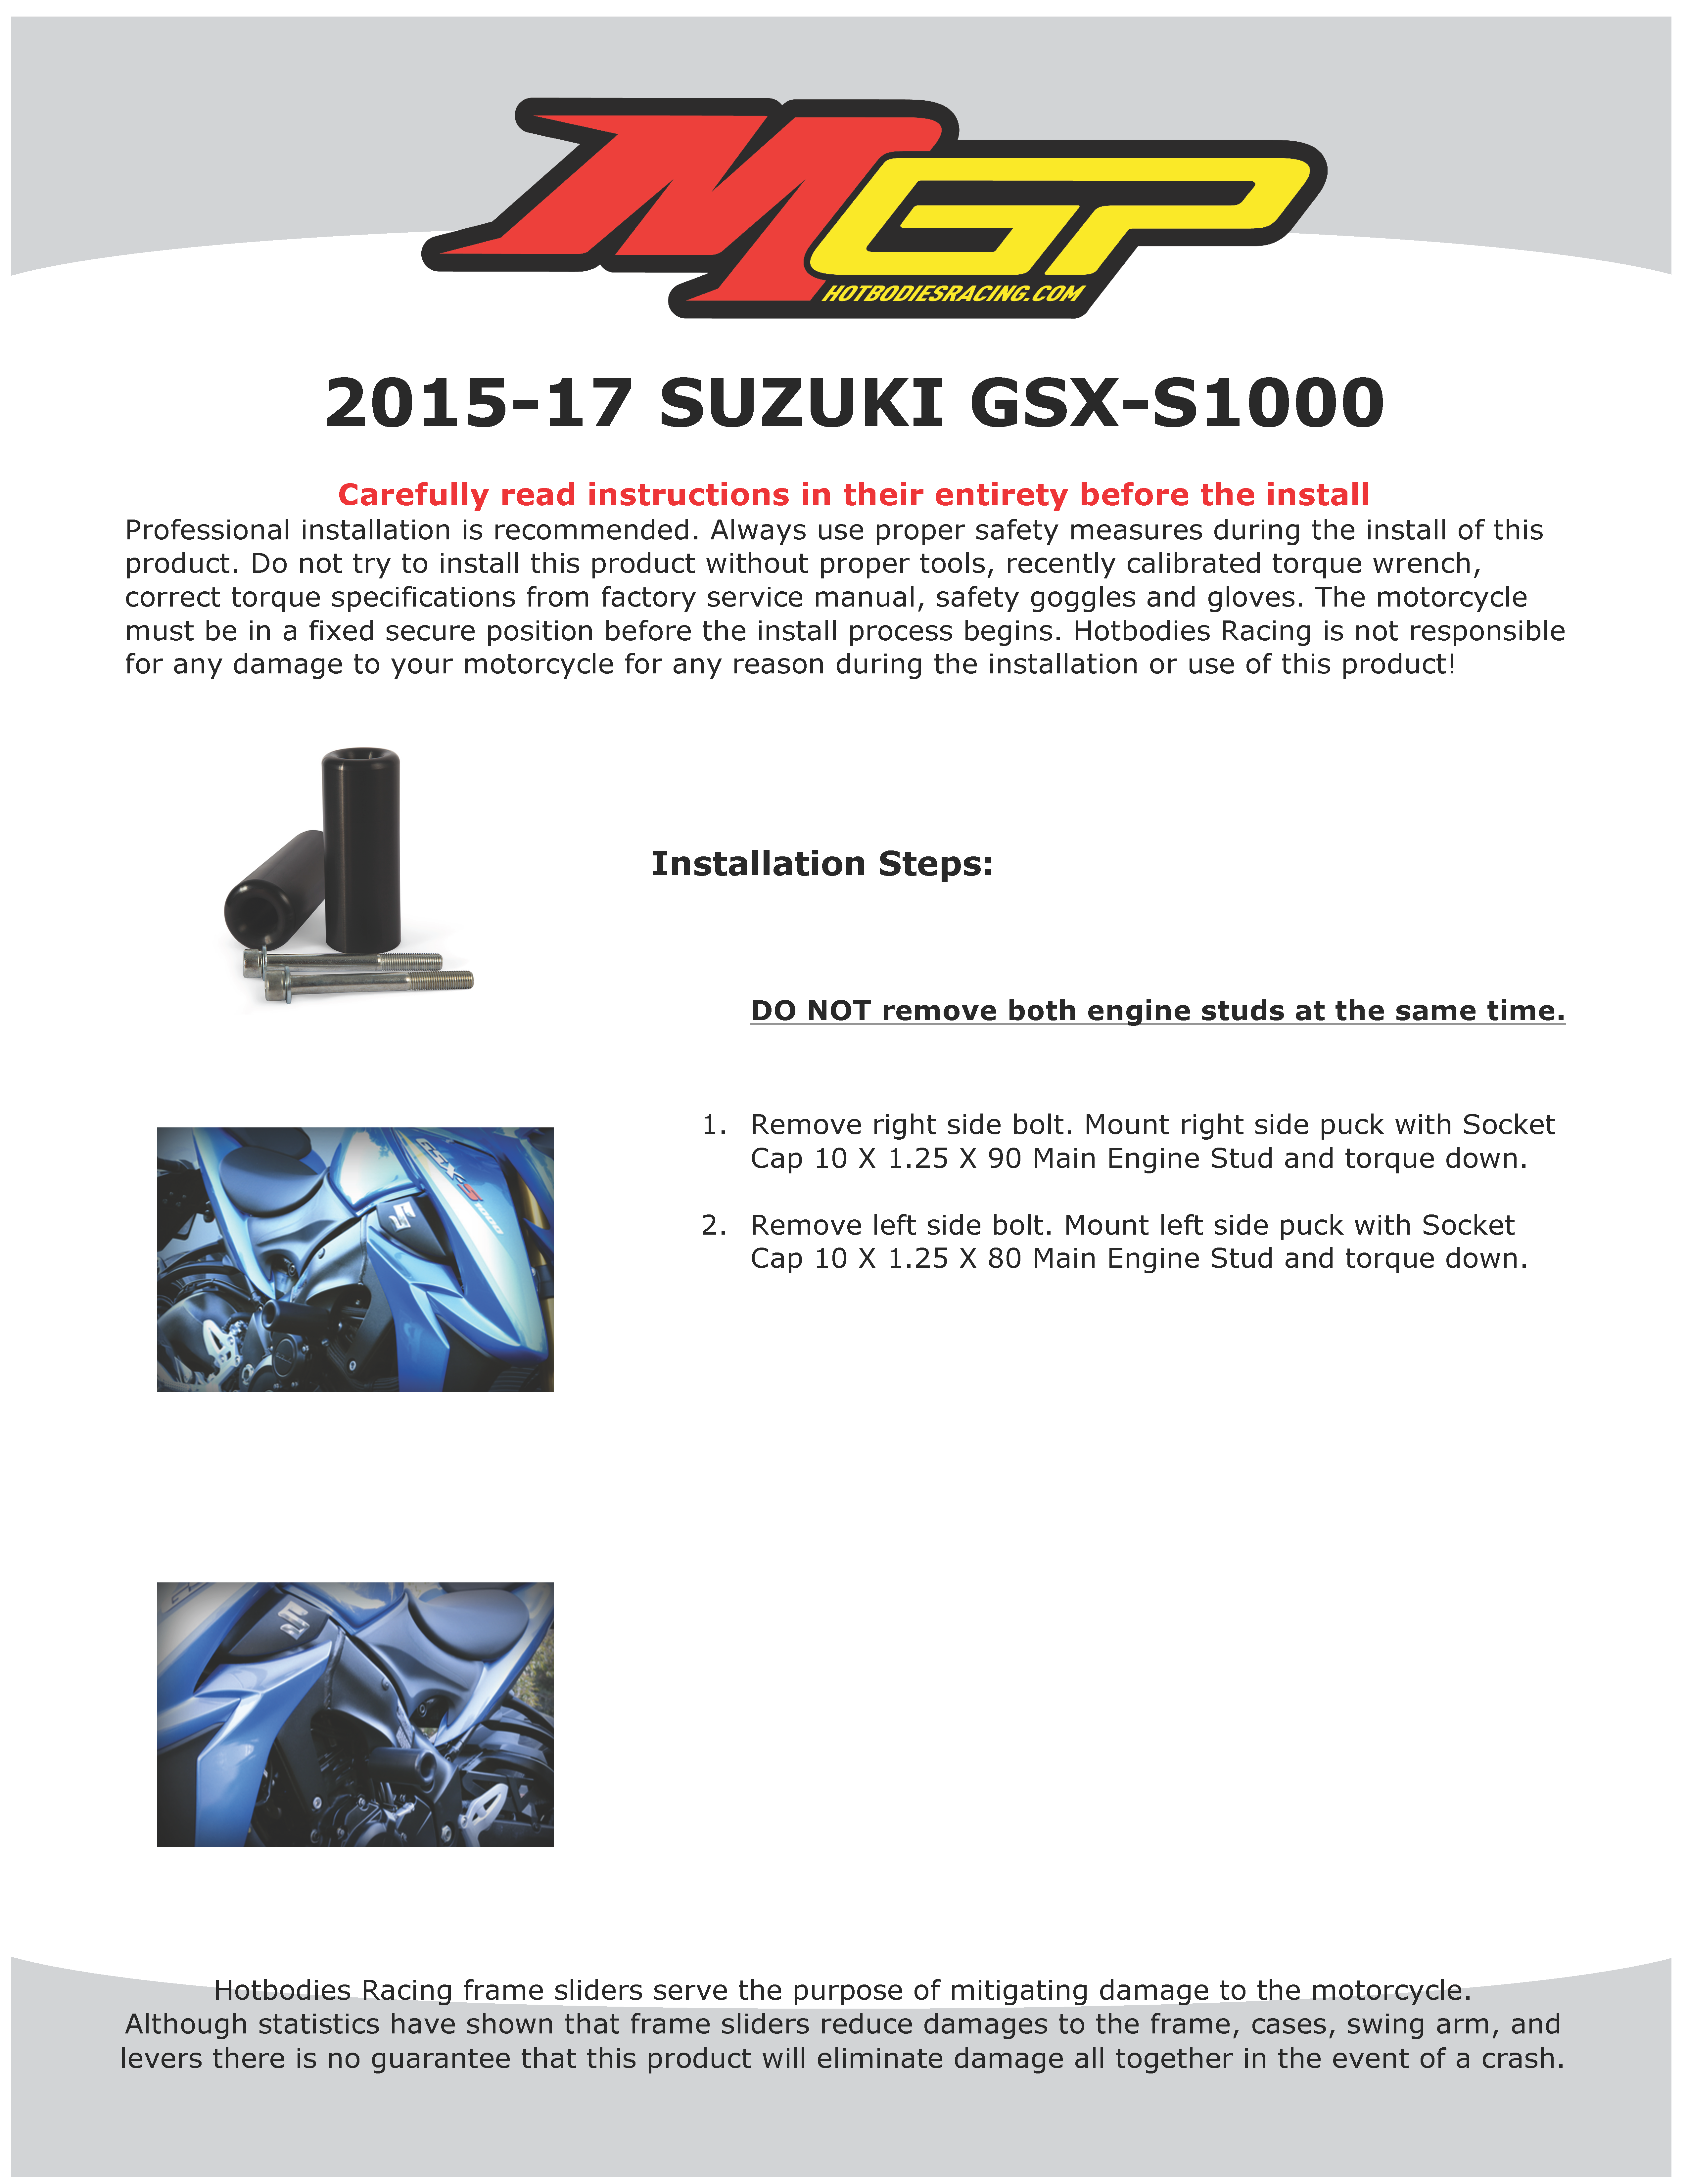 

SUZ GSX-S1000 (15-17) Framesliders NO CUT Black

